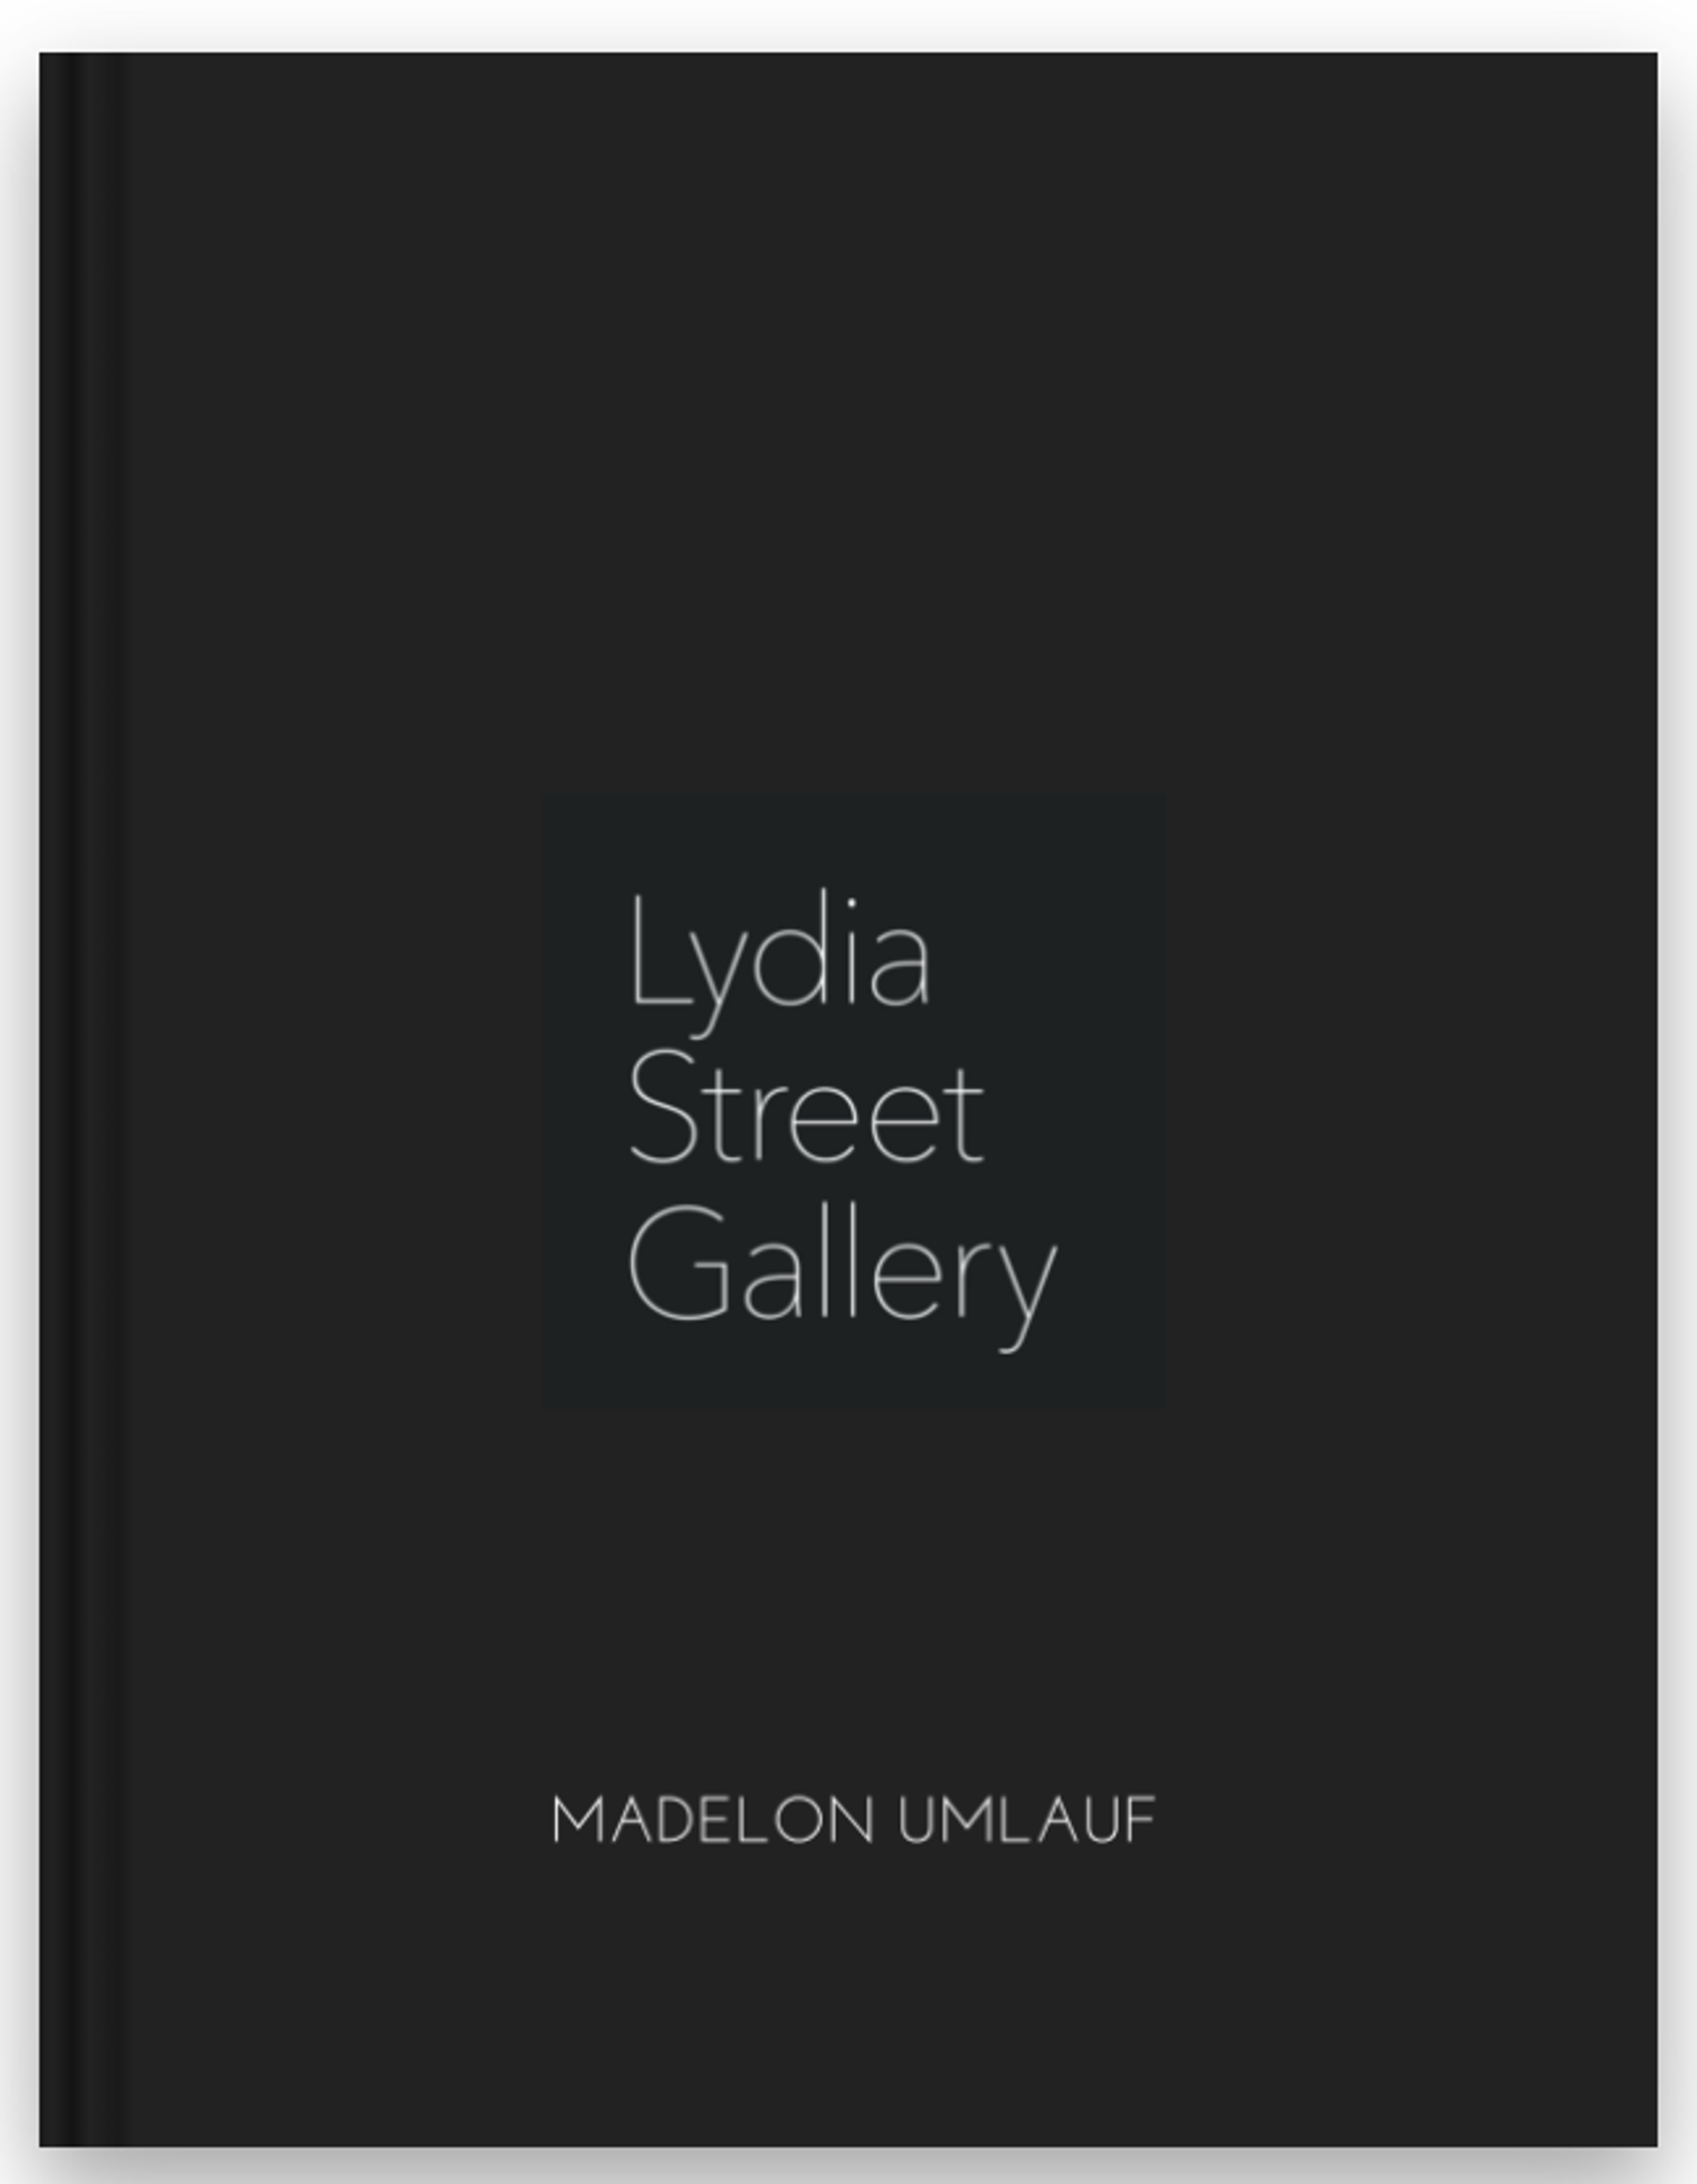 Artist Catalog - Madelon Umlauf by Lydia Street Gallery